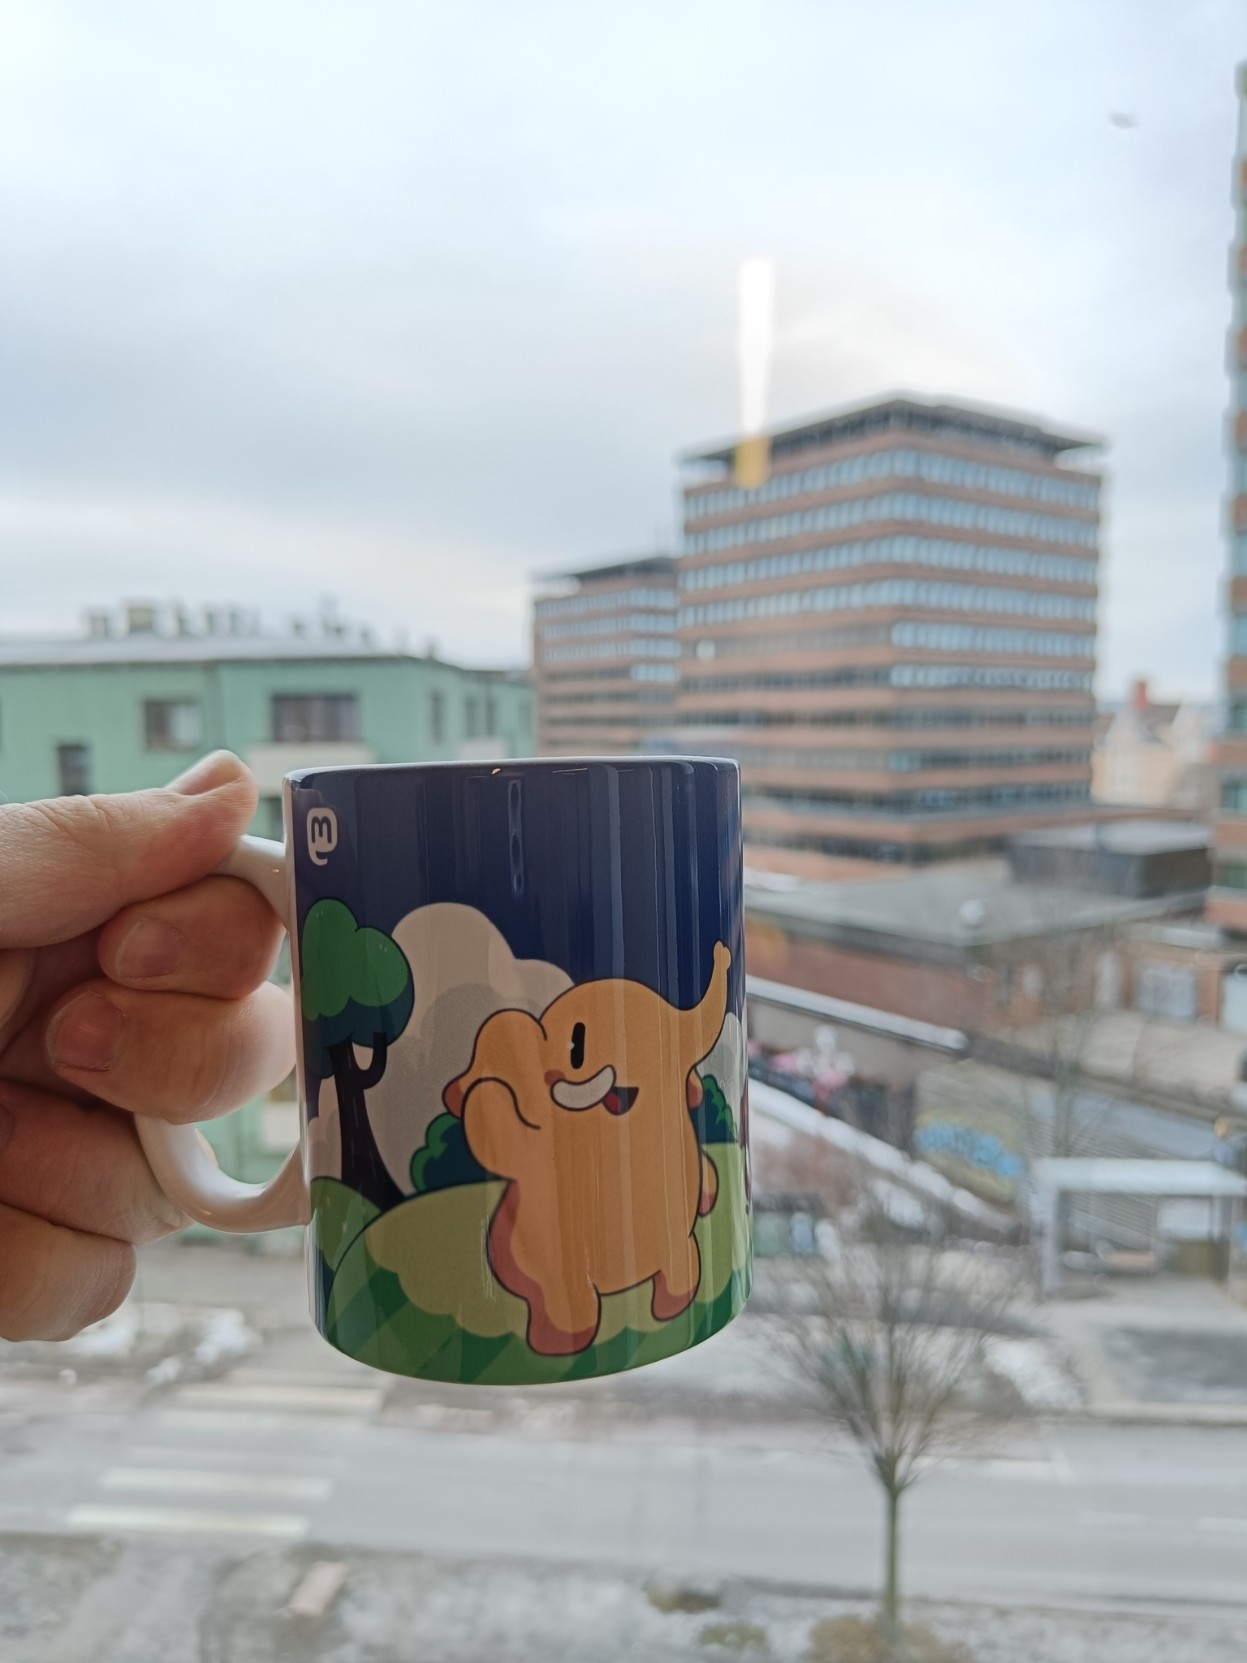 Mastodon mug with Tøyen, Oslo in the background